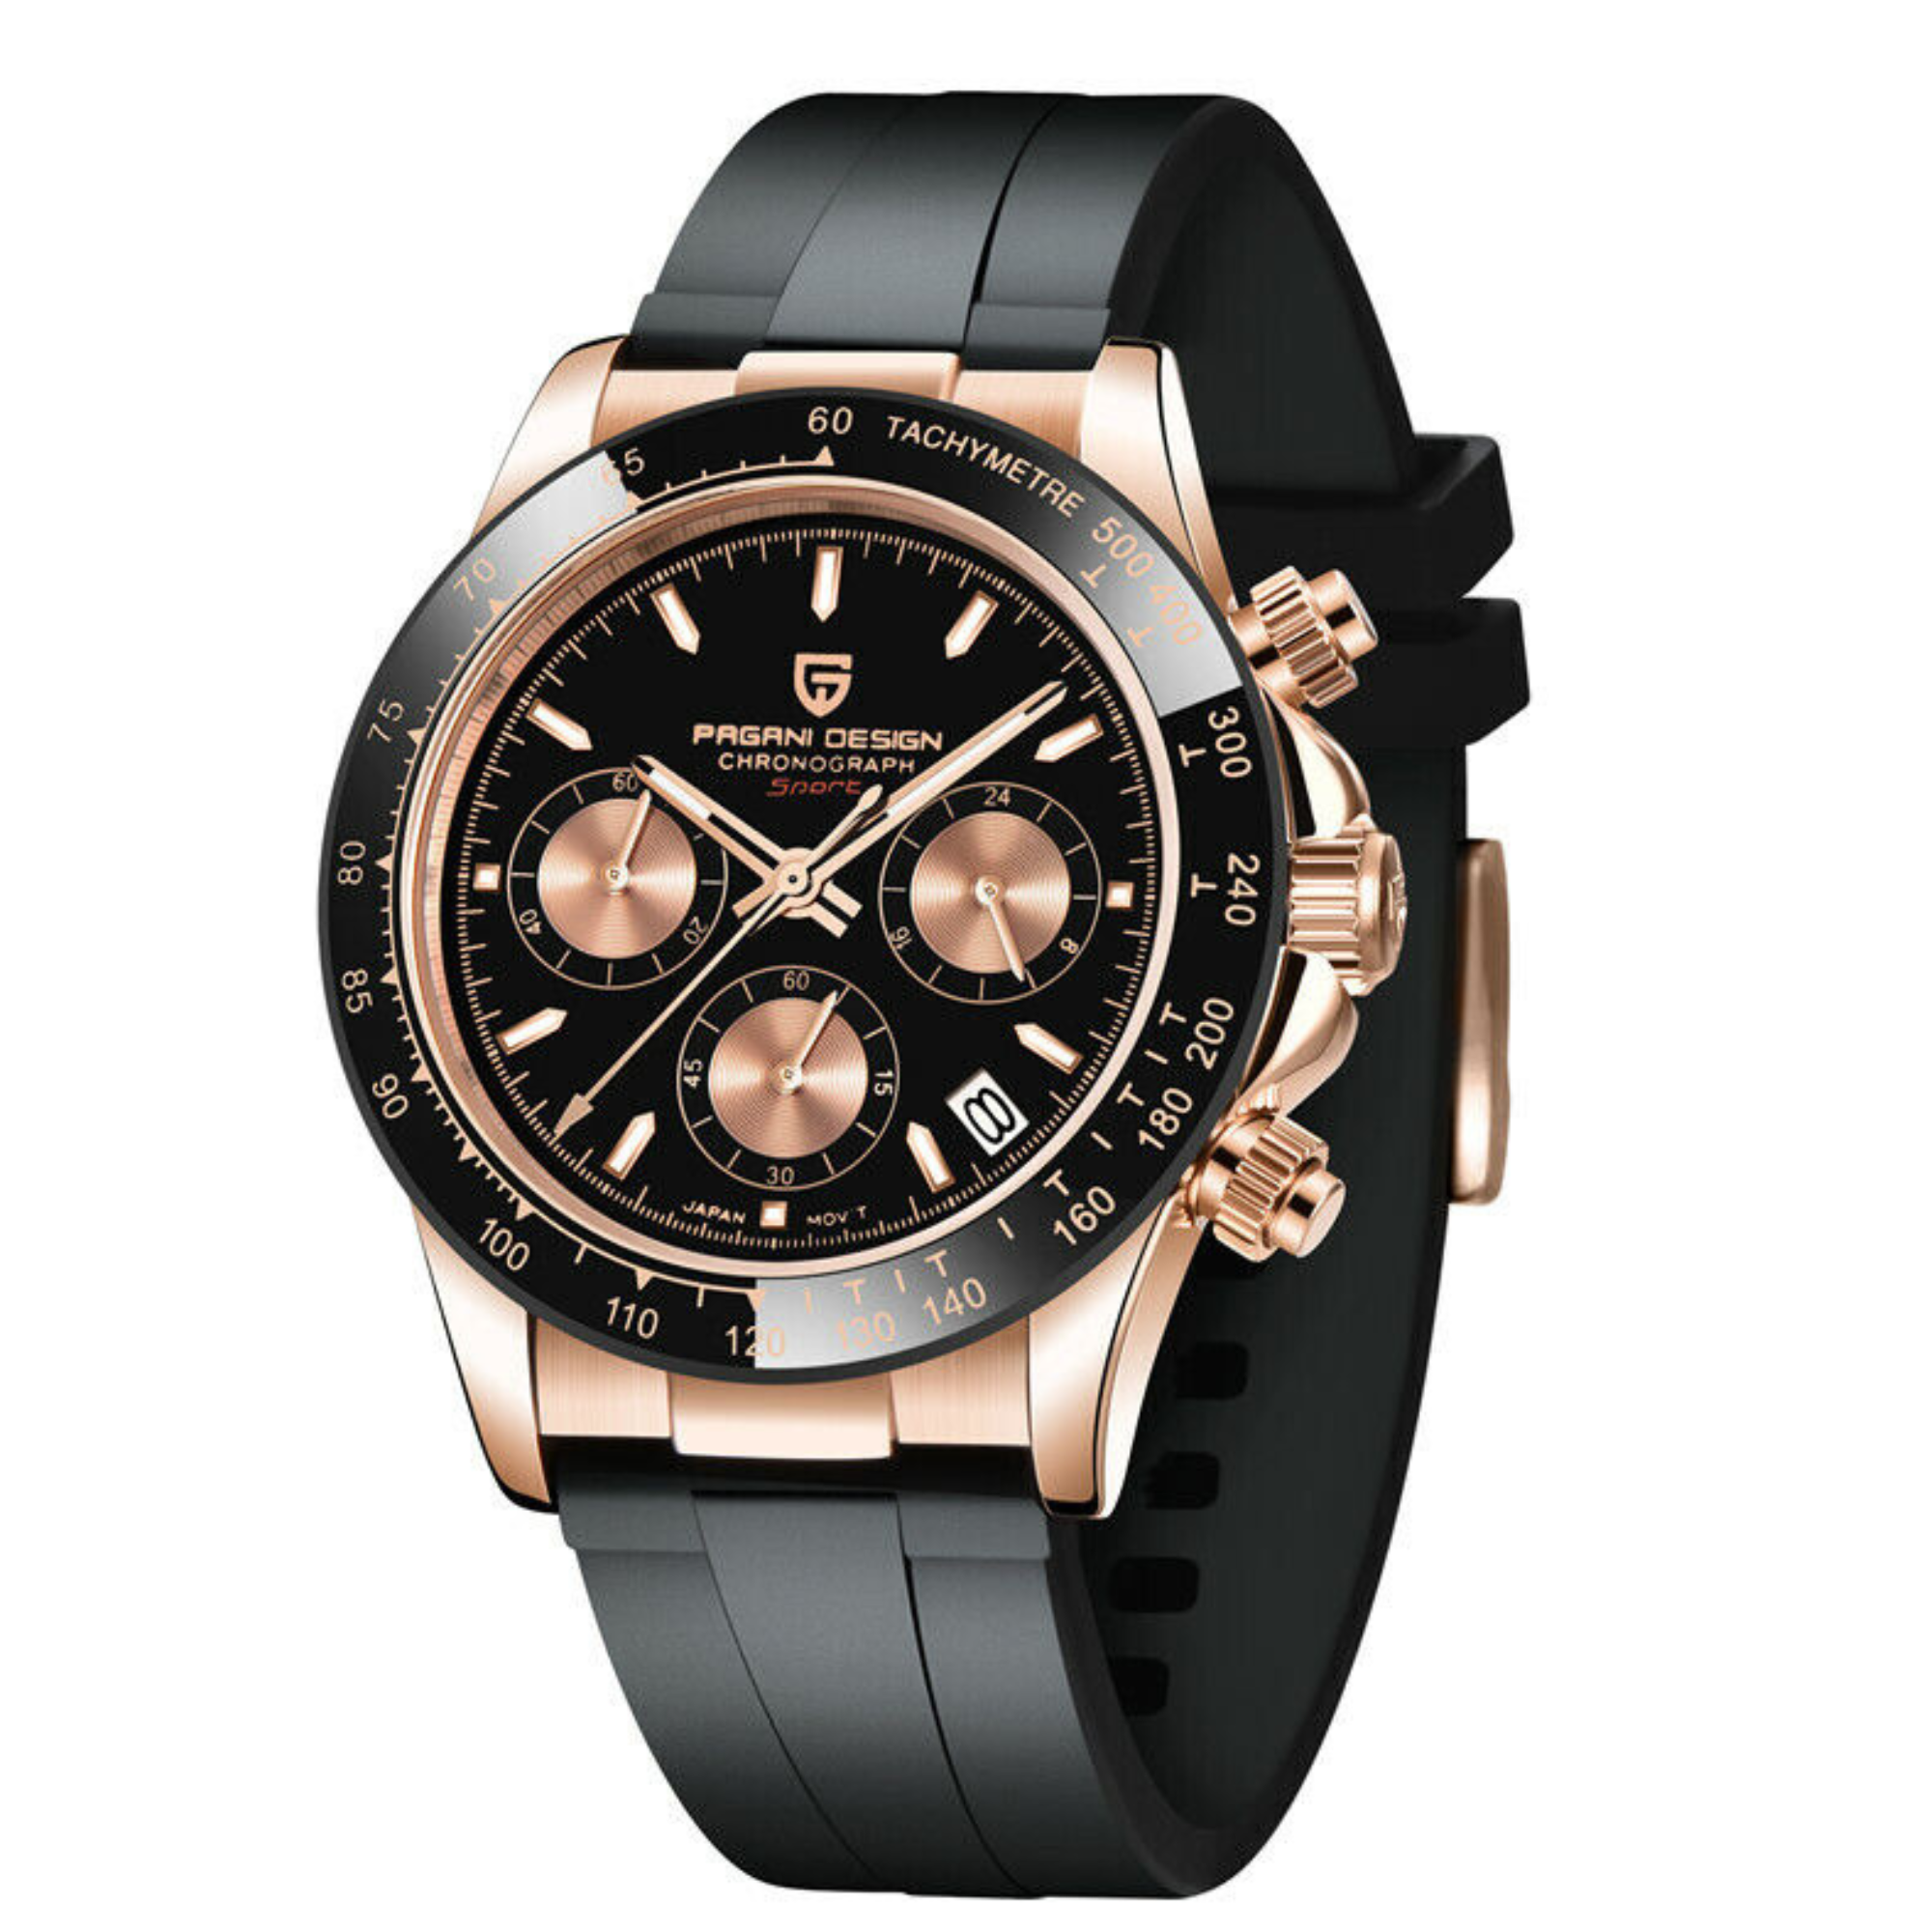 Pagani Design PD-1644 Daytona Chronograph Luxury Meca-quartz Movement (Japanese VK63) | Stainless Steel Men's 40MM Watch - Rose-Gold Black Dial